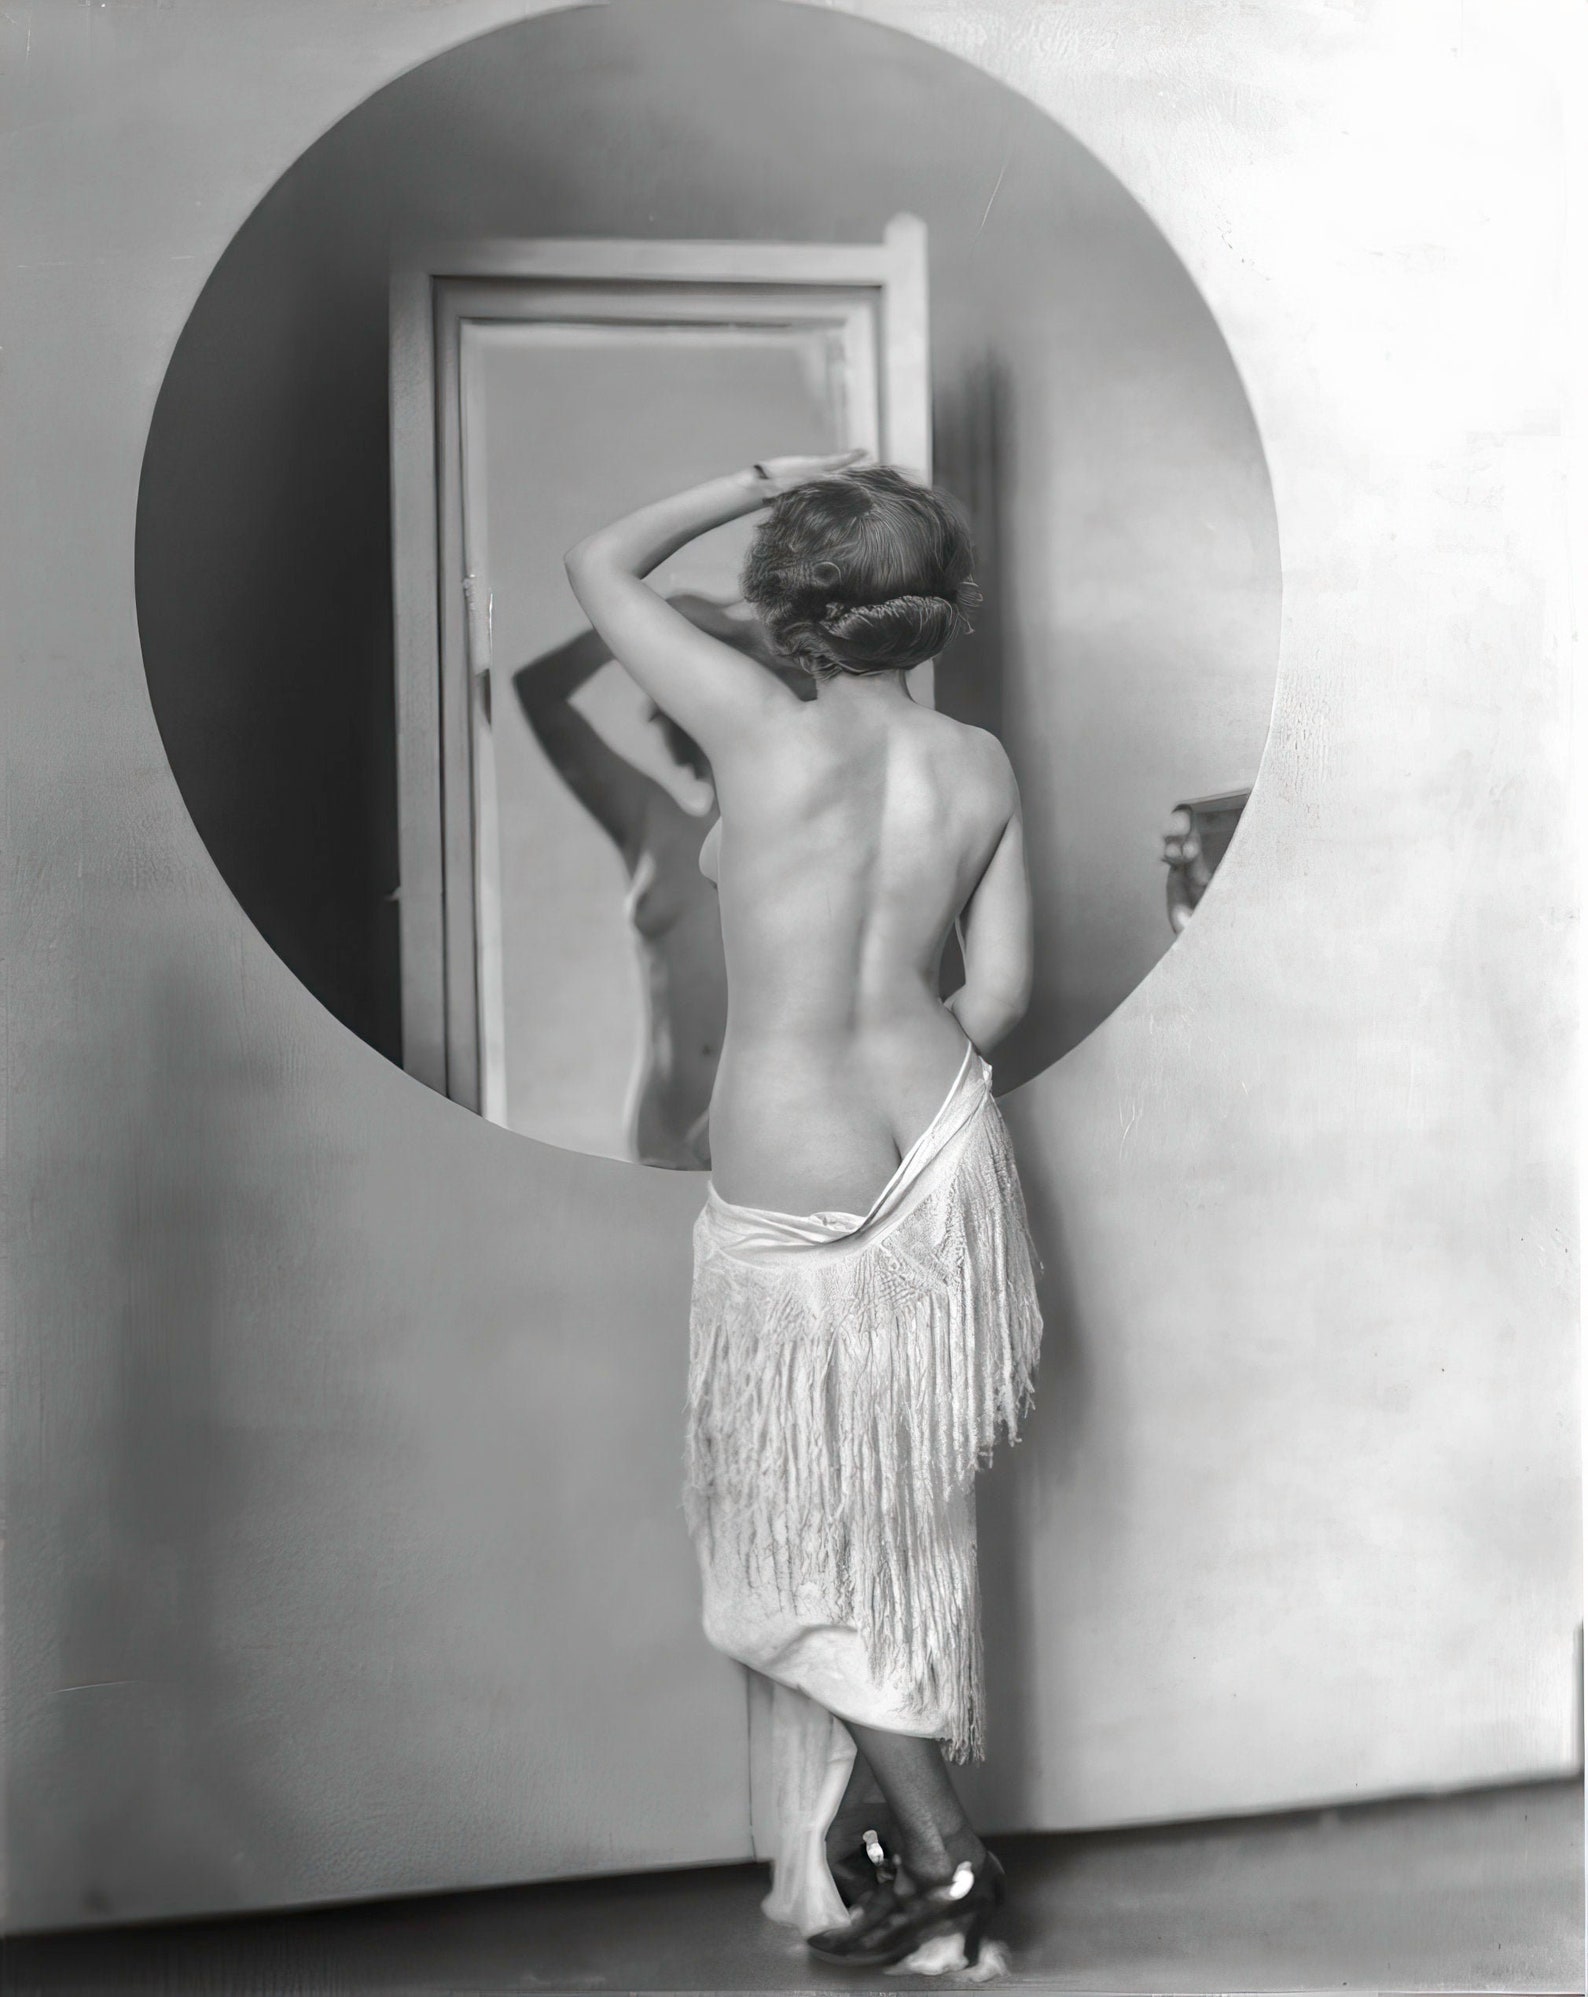 Tallulah Bankhead topless circa 1920's black & white image 1.